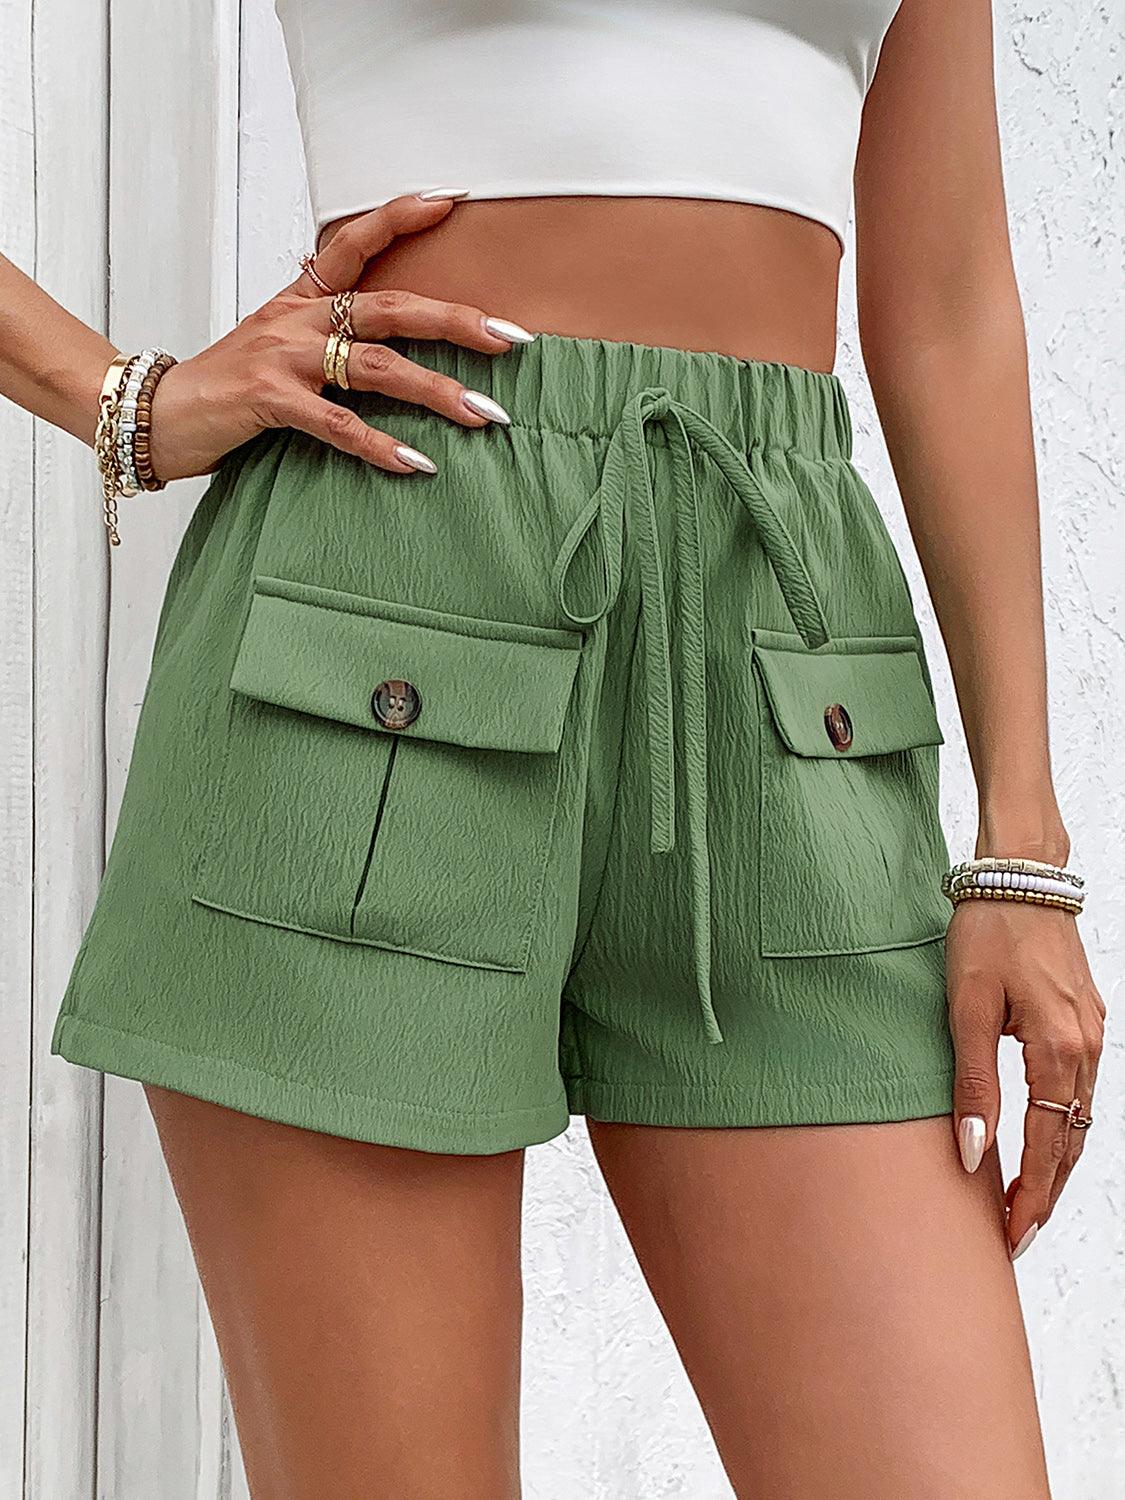 Women's Shorts Tied Elastic Waist Shorts with Pockets